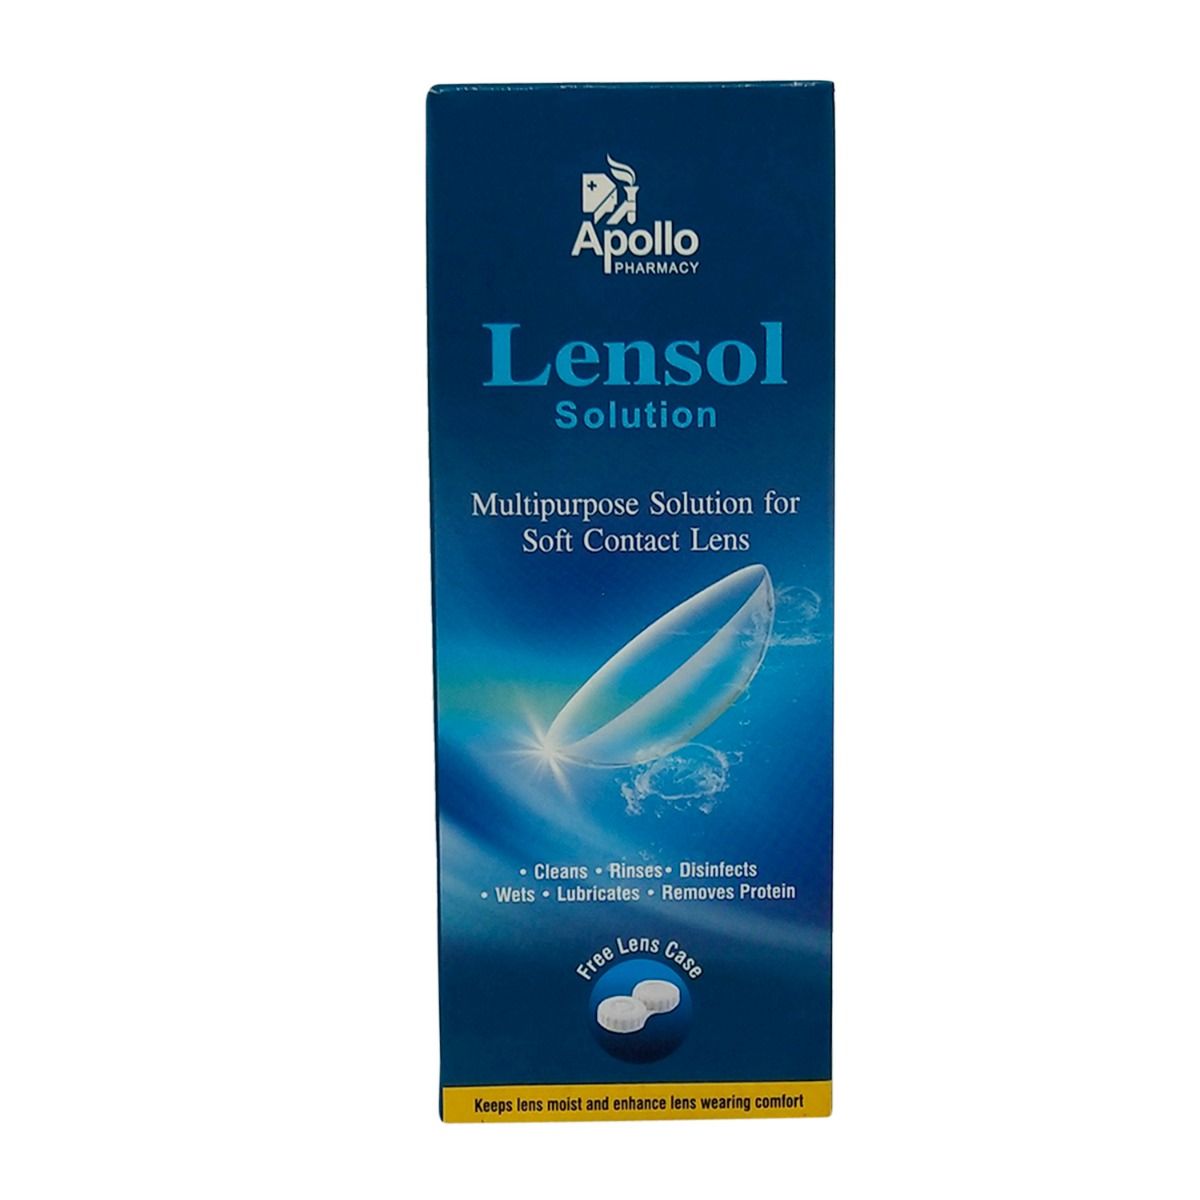 Buy Apollo Pharmacy Lensol Solution, 120 ml Online